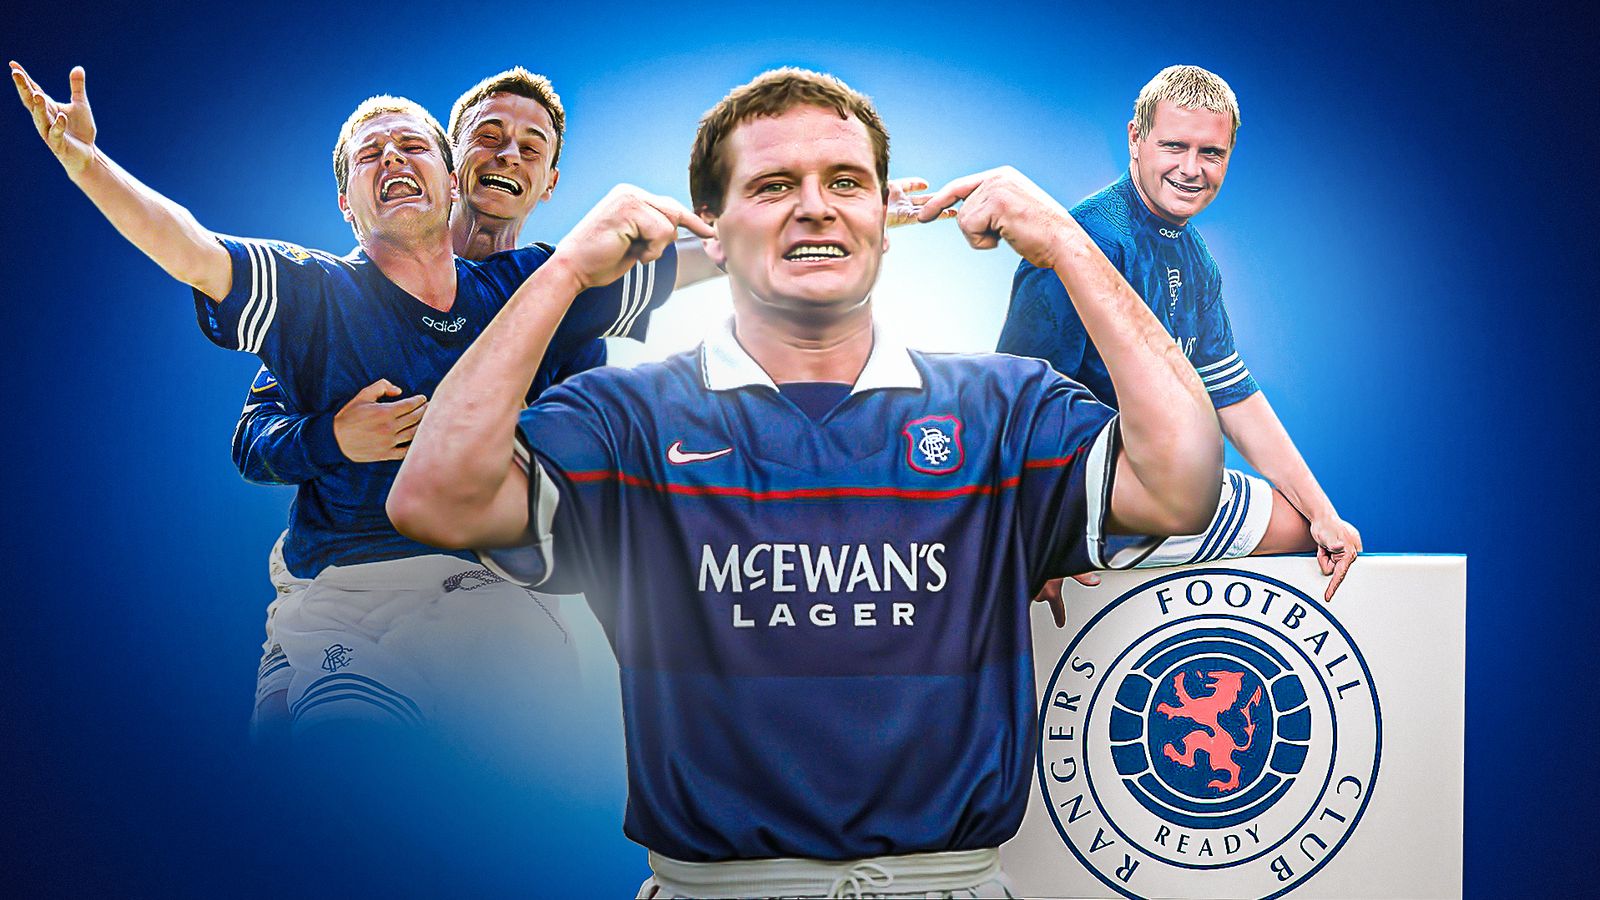 Paul Gascoigne at Rangers: When Gazza moved to Scotland, Football News